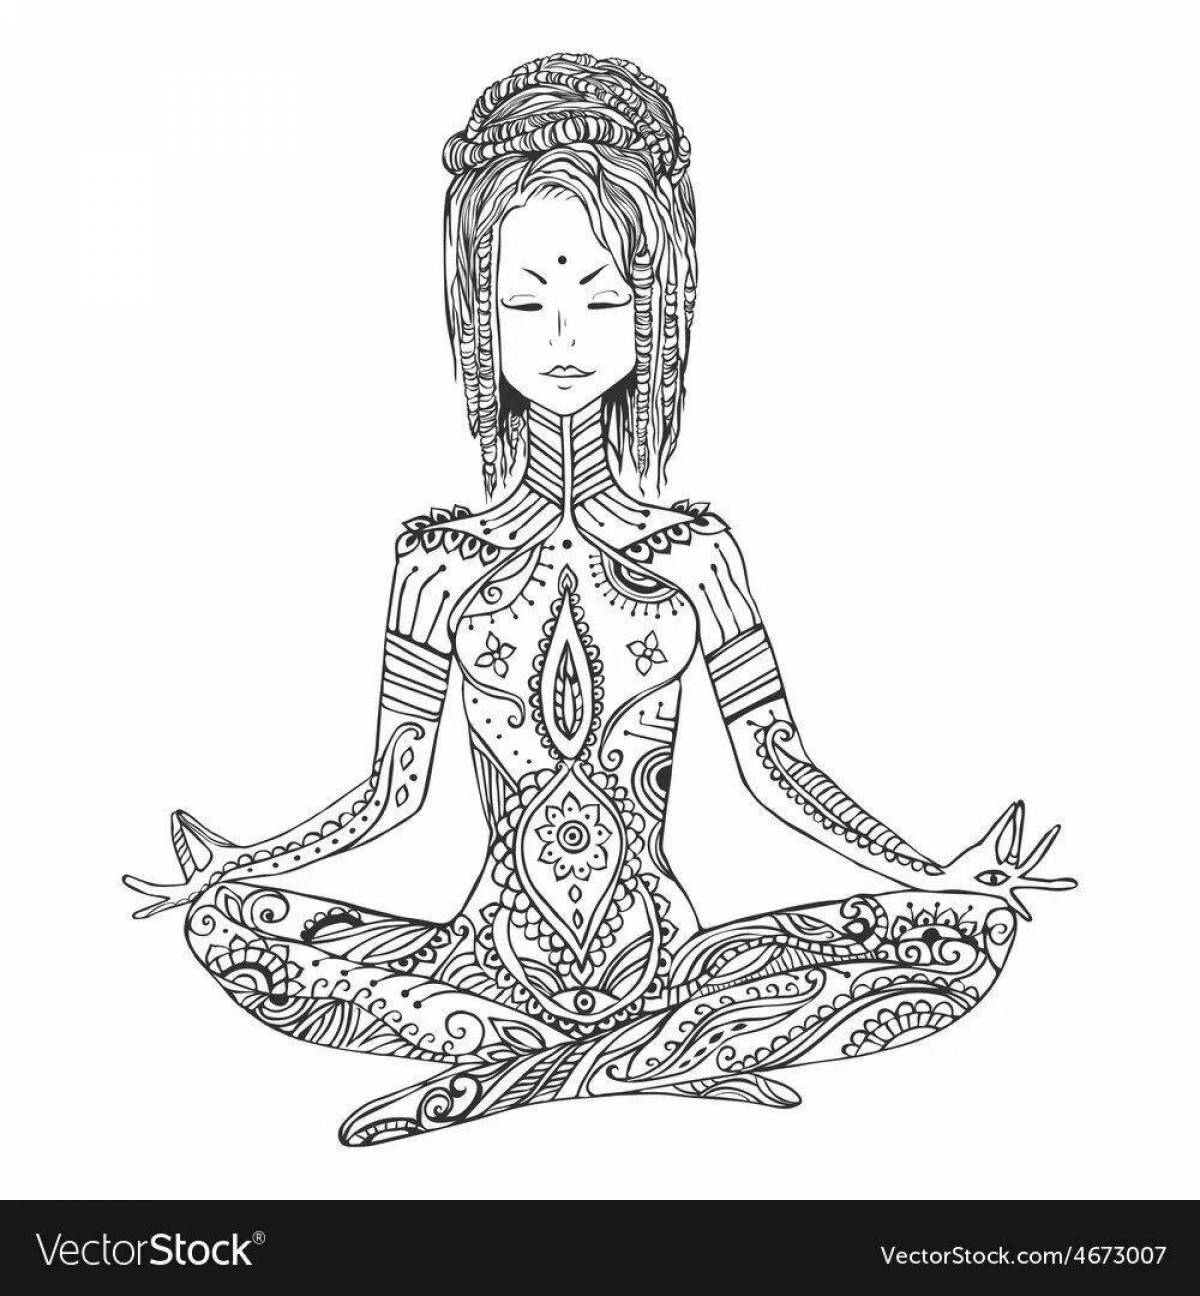 Serene coloring page для медитации и релаксации